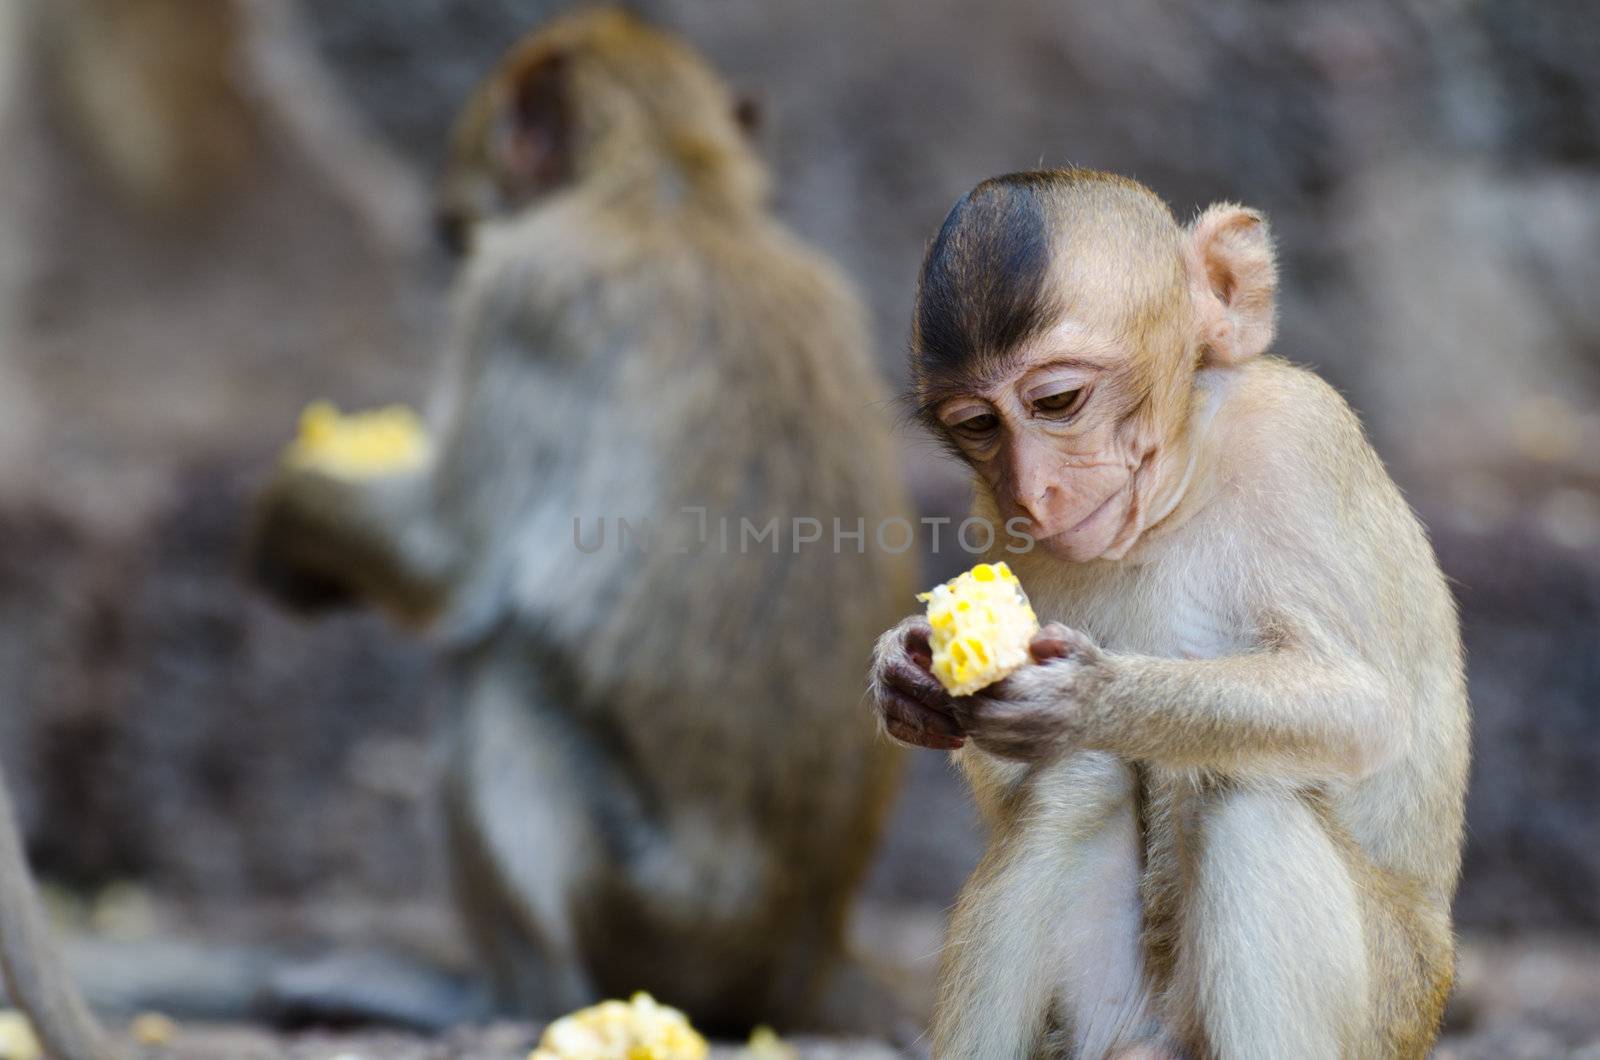 Monkey sitting eating corn. by chatchai